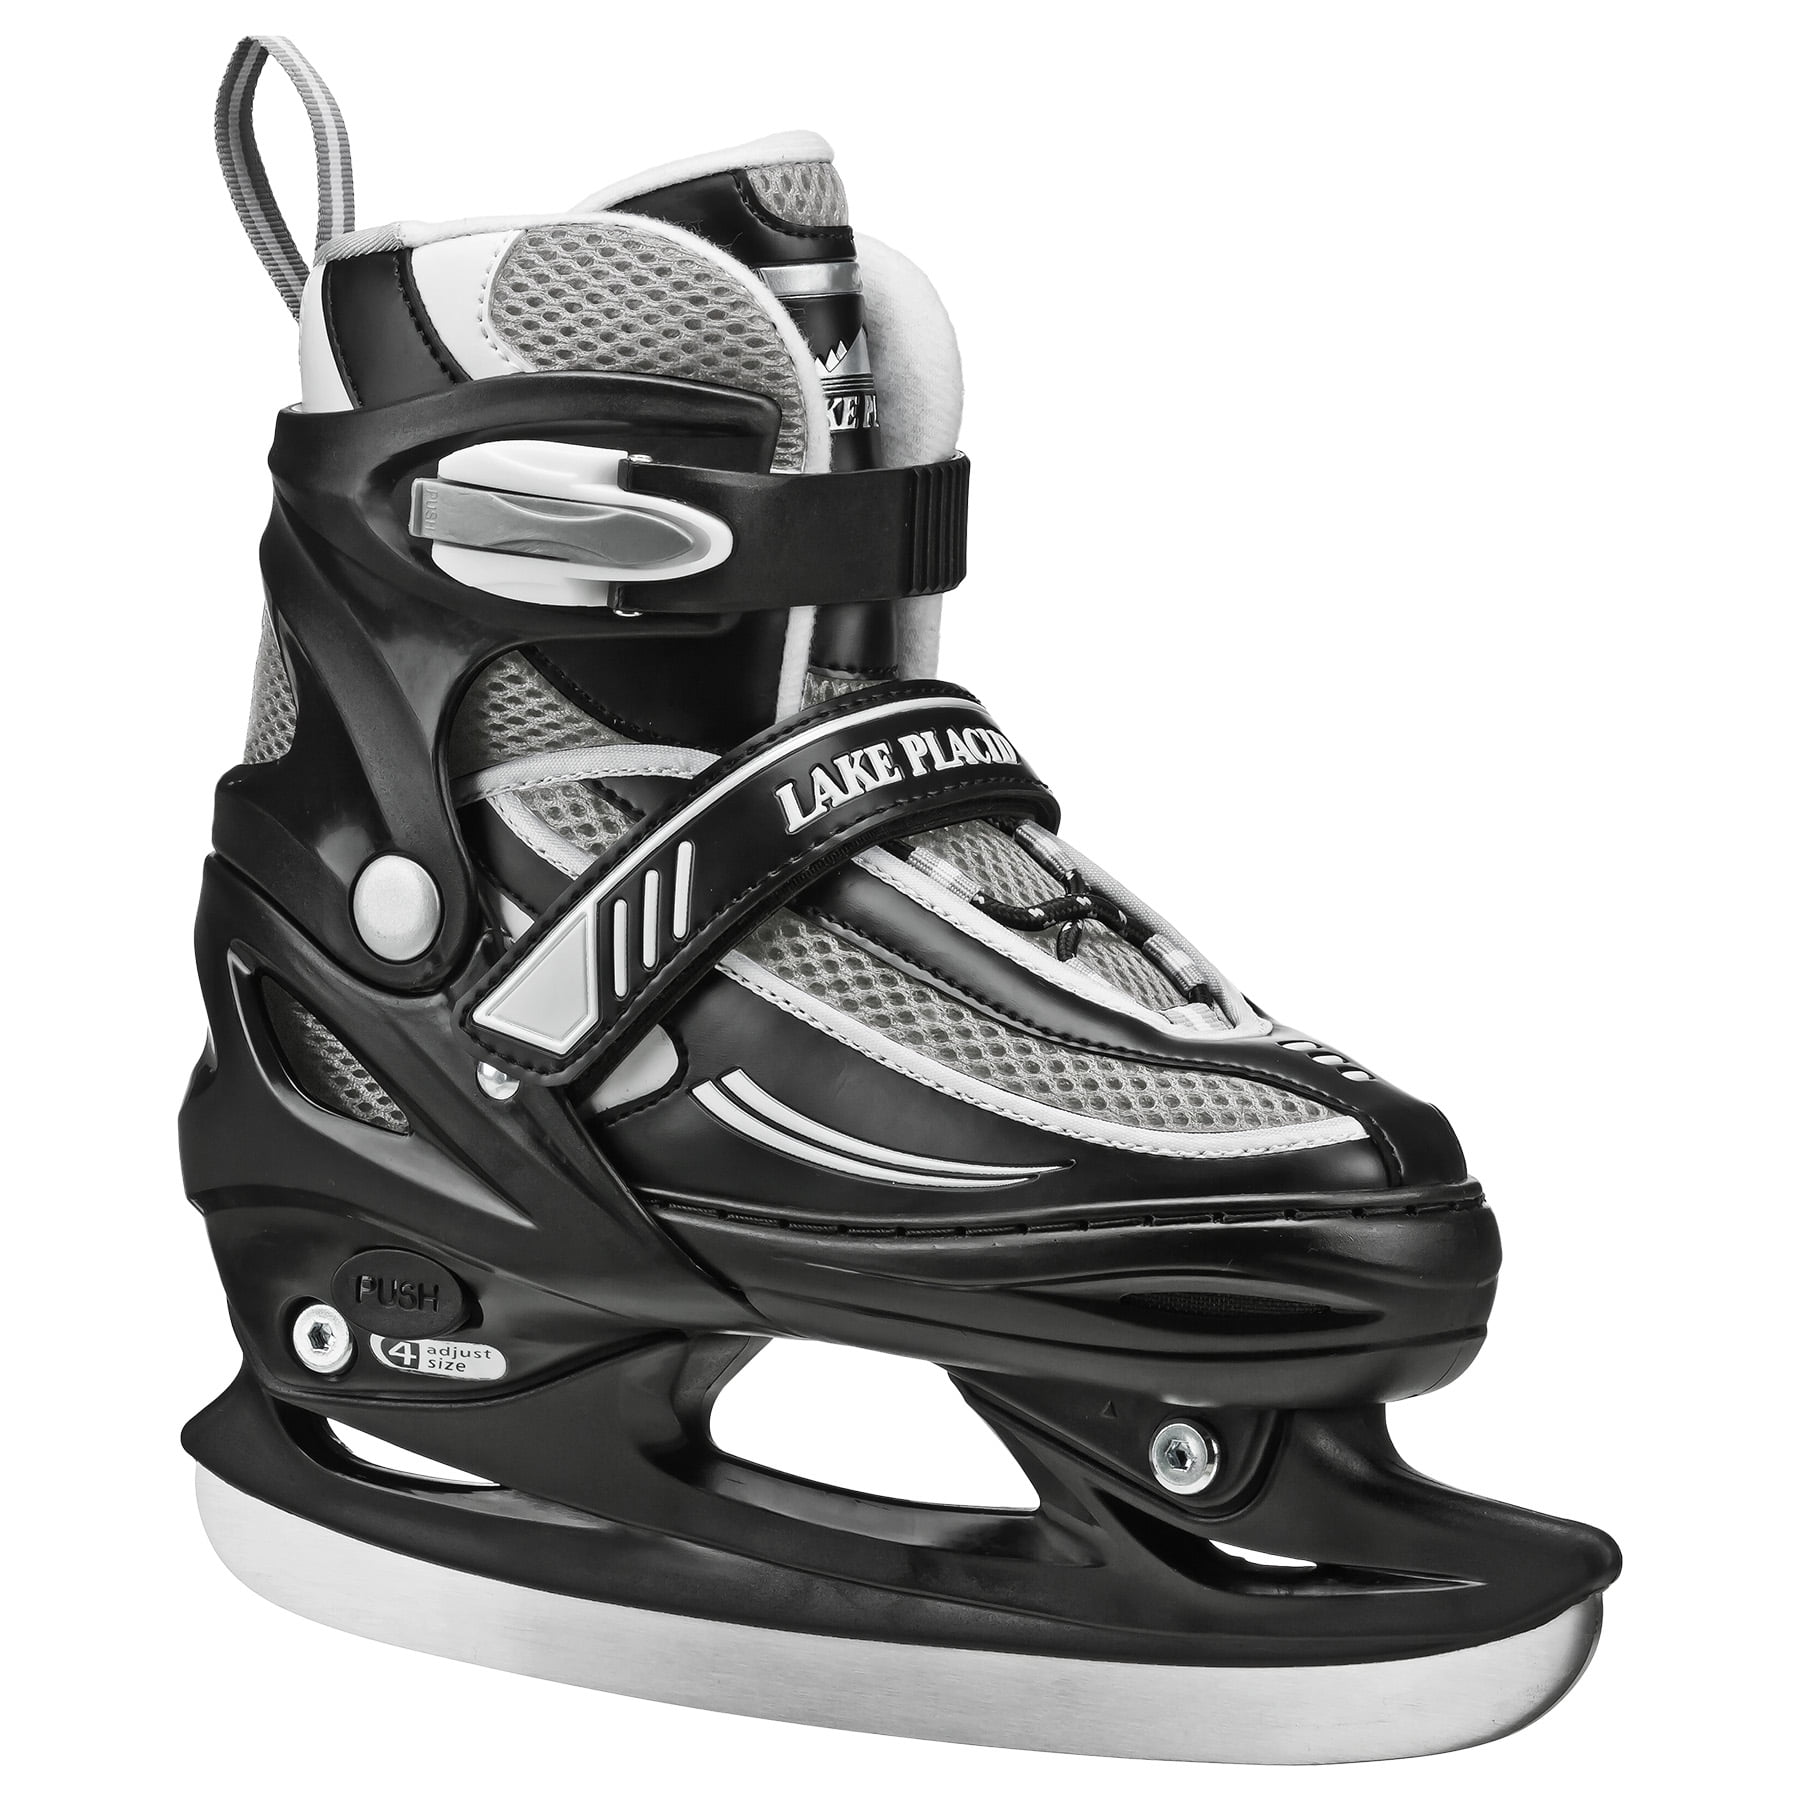 Lake Placid Adjustable Ice Skates age 5 to 8 adjust to sizes 11 to 1 Blue Black 